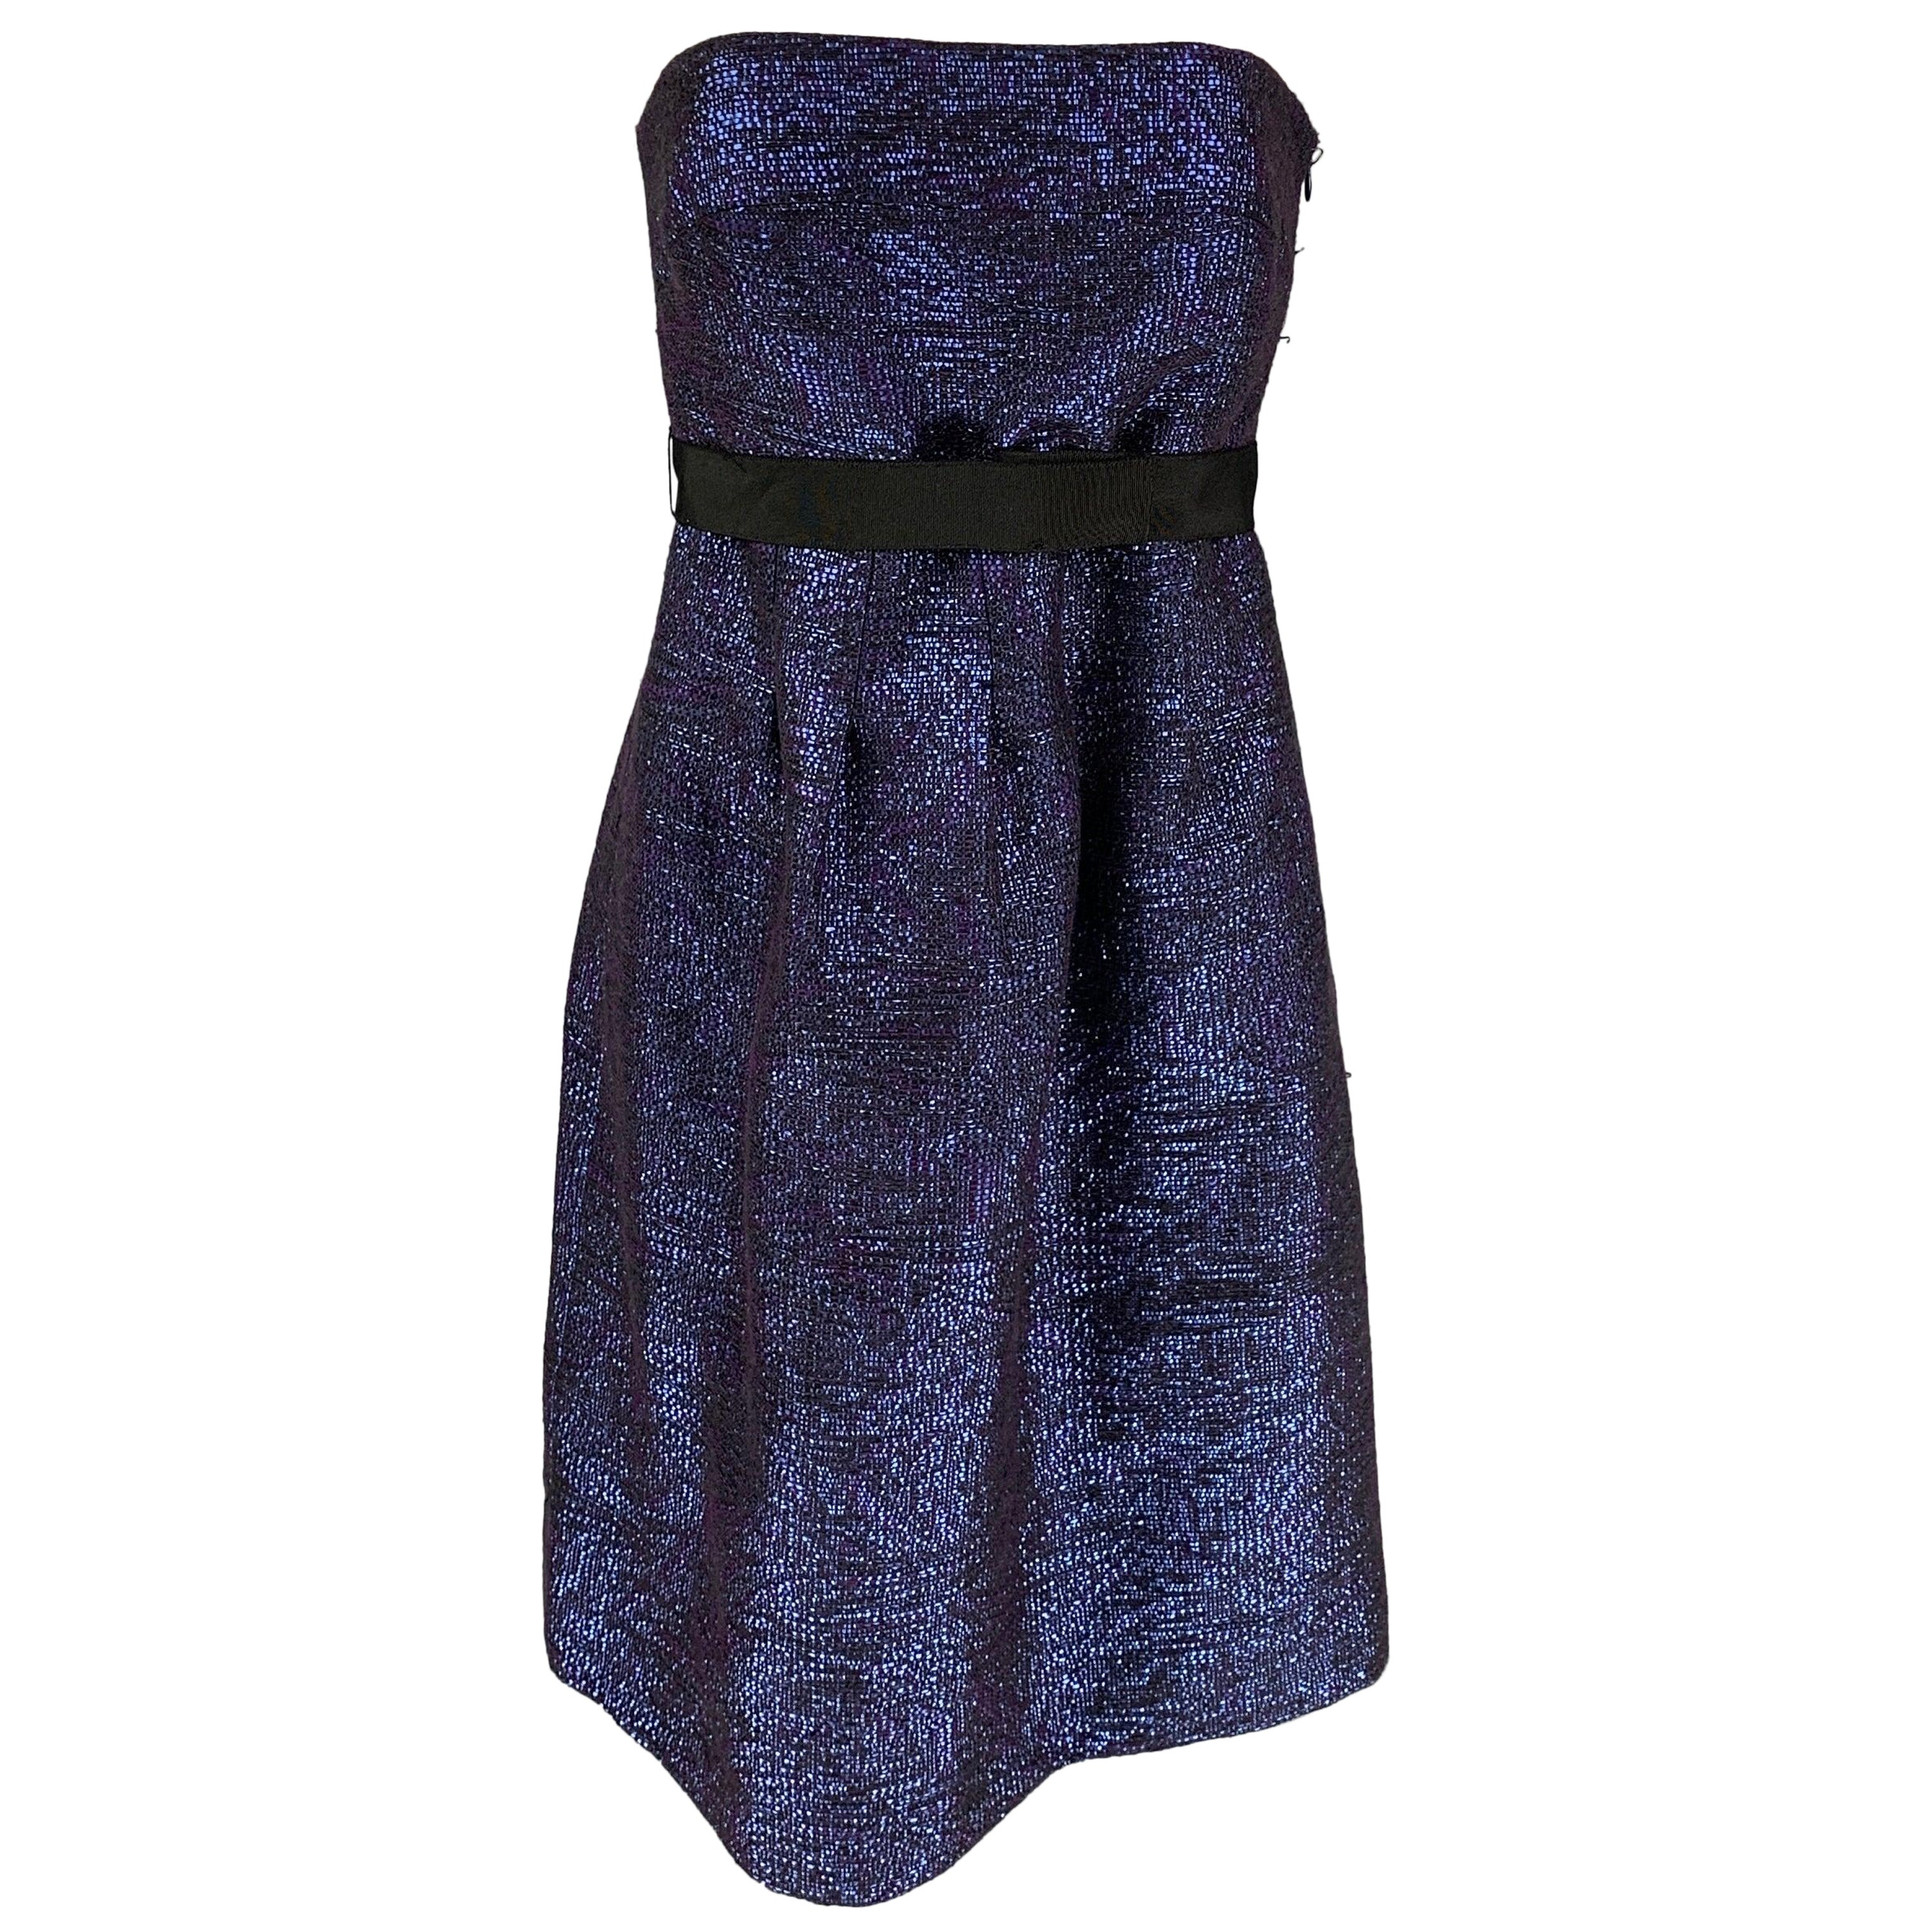 LELA ROSE Size 6 Blue & Black Acrylic Blend Woven Strapless Dress For Sale